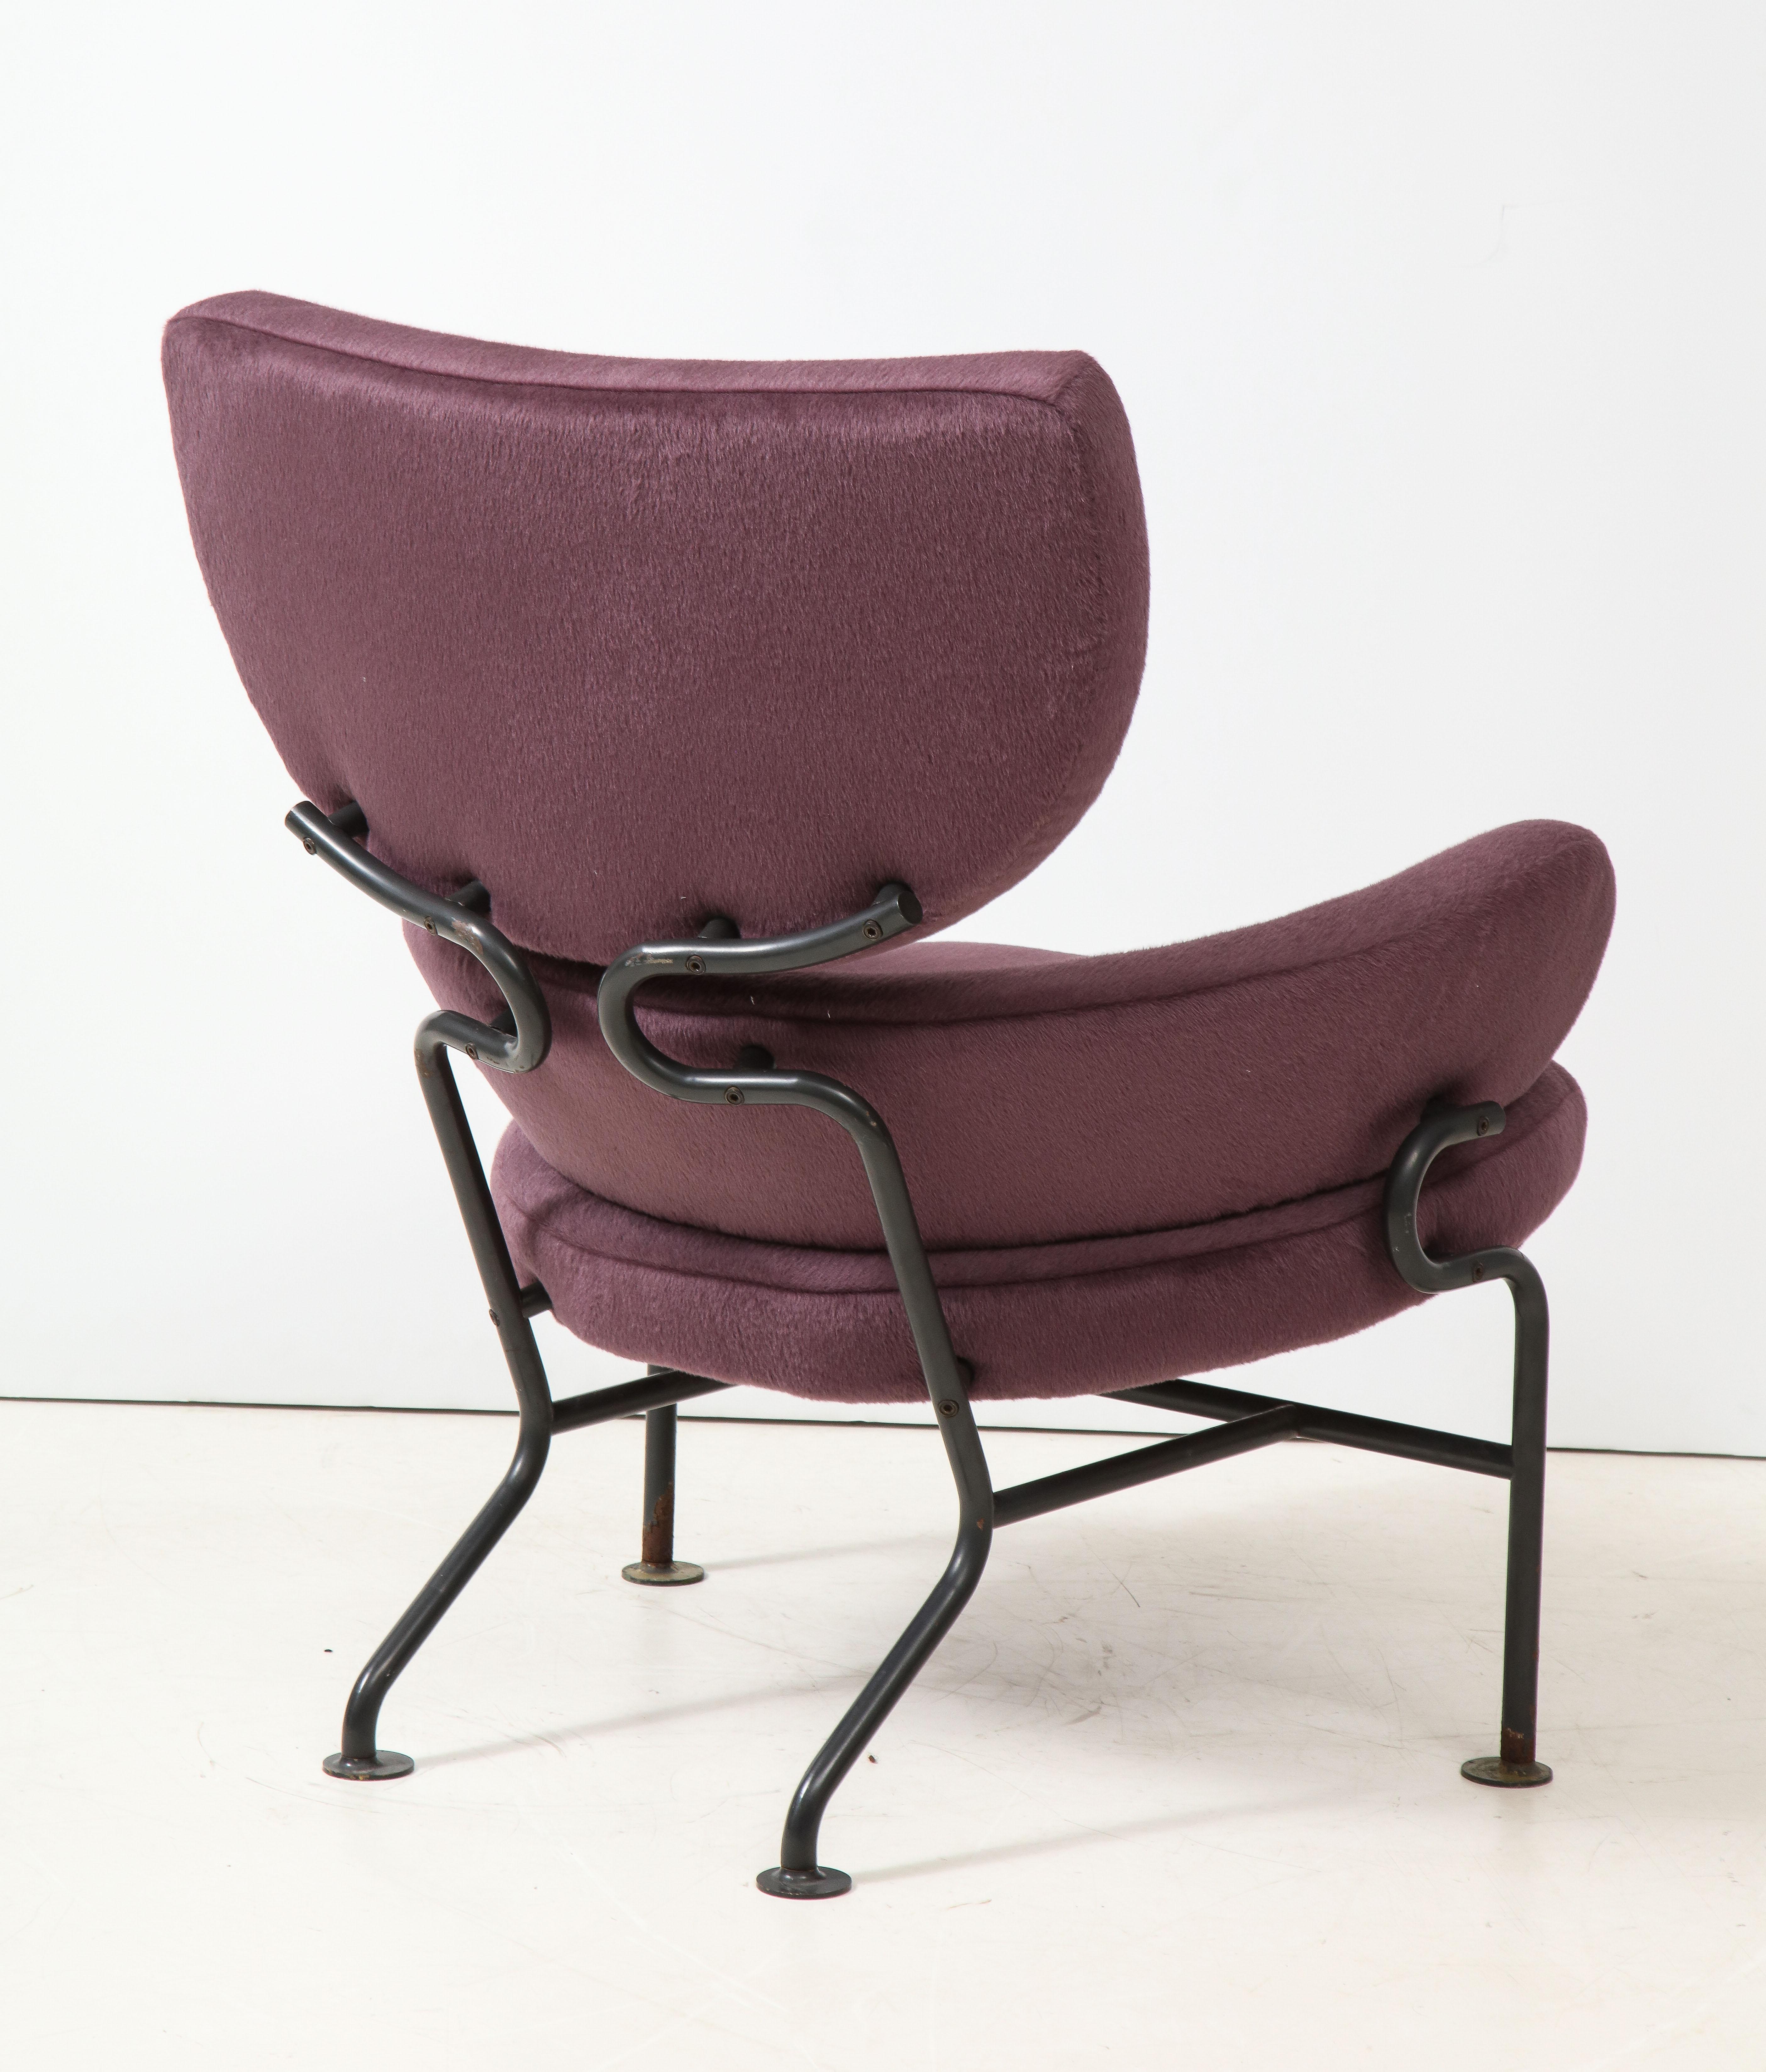 Fabric Purple Alpaca Model Pl 19 Armchair by Franco Albini, Italy, c. 1959